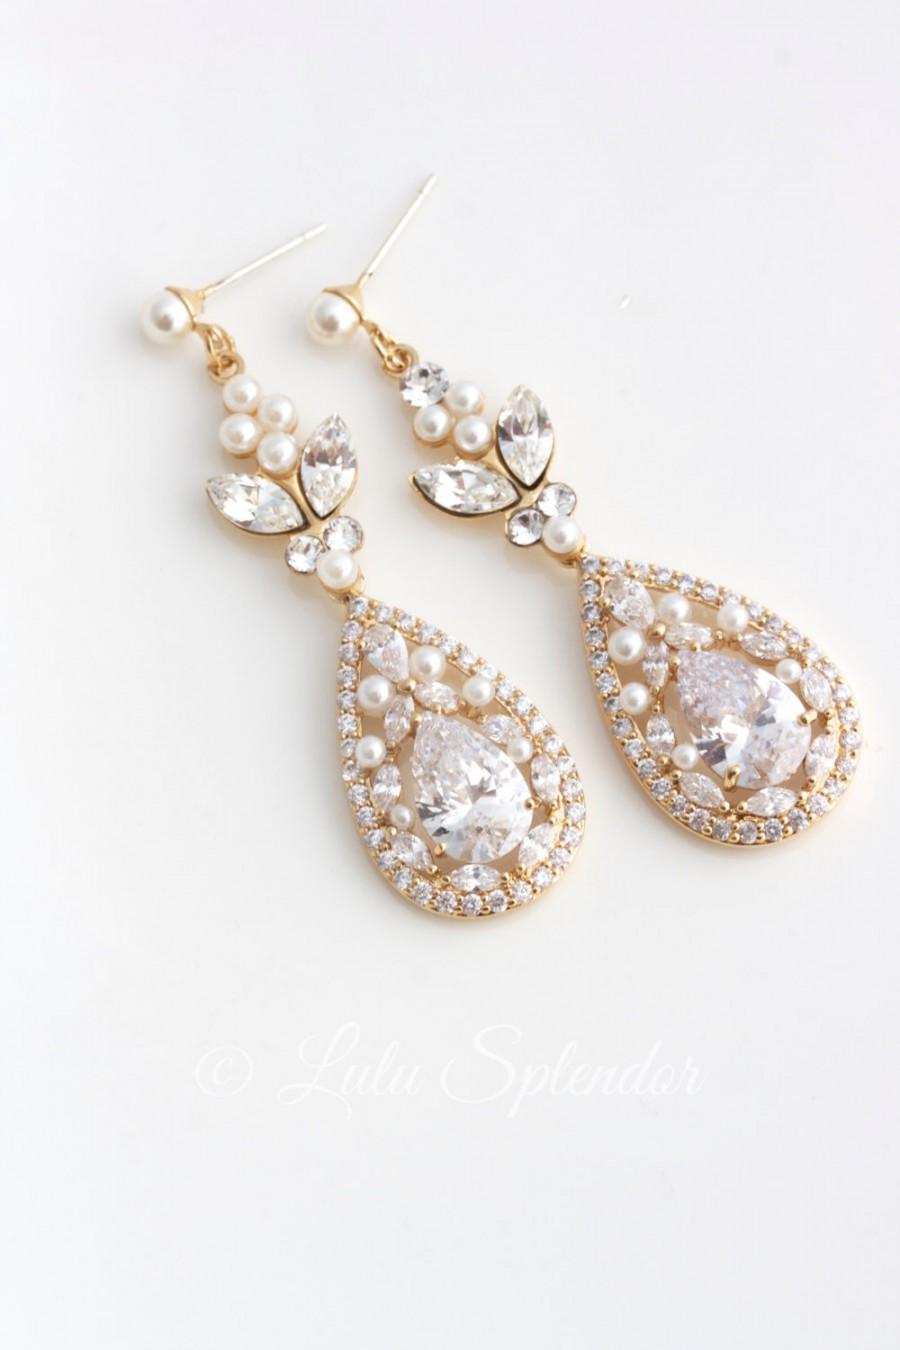 Mariage - Gold Bridal Earrings Long Wedding Earrings Cubic Zirconia Teardrop Wedding Jewelry Swarovski Crystal Wedding Jewelry VIVIENNE